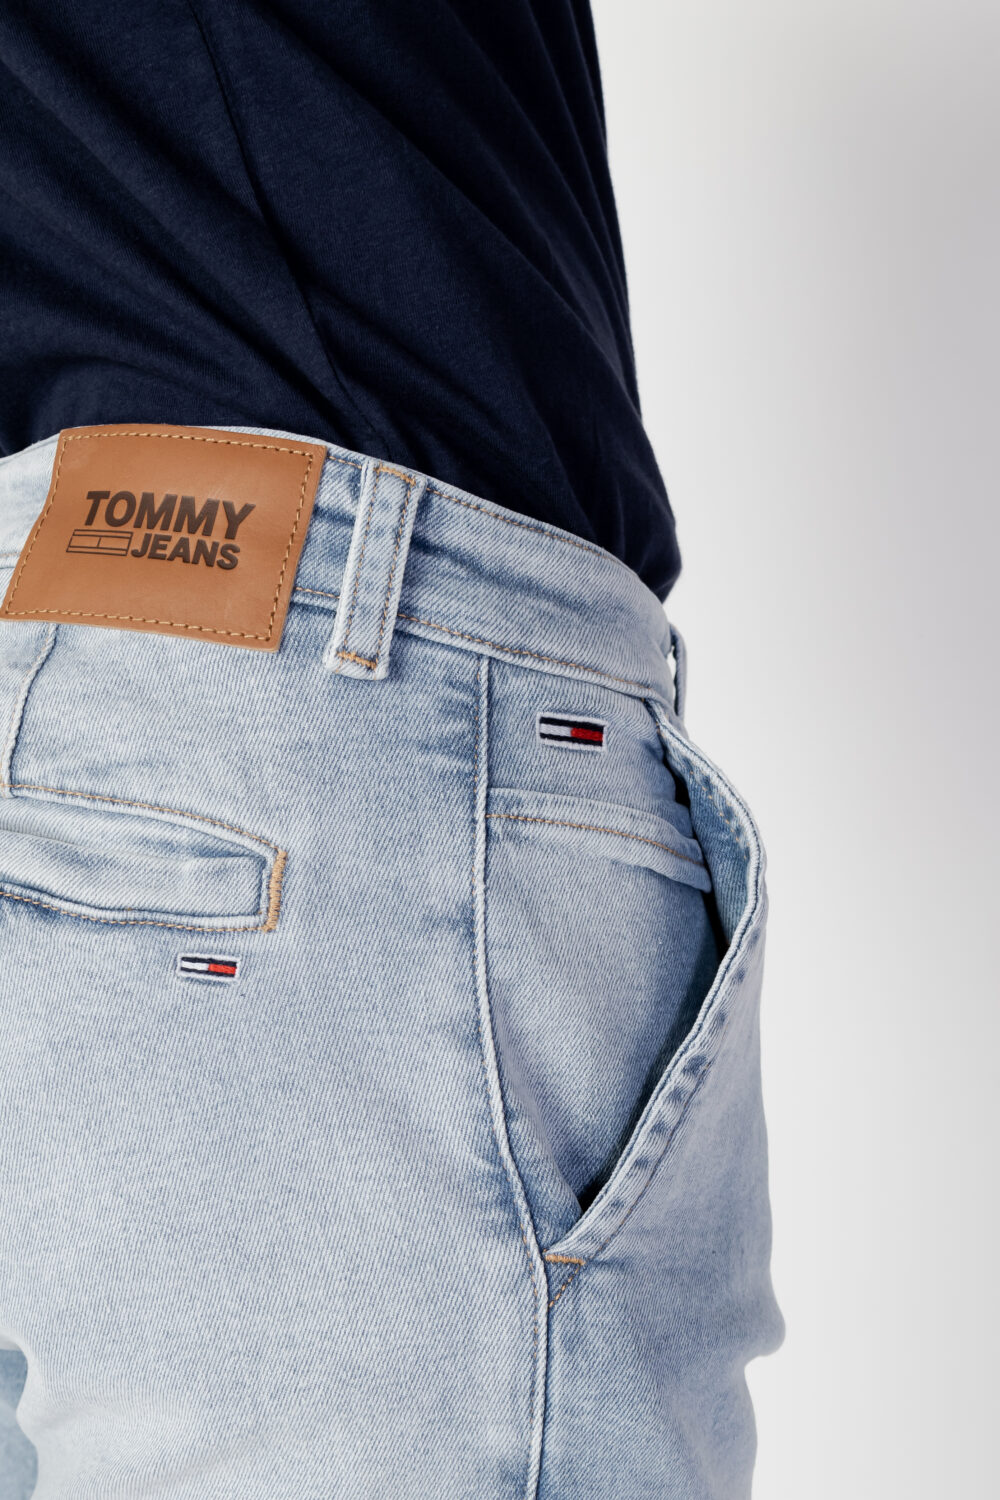 Jeans slim Tommy Hilfiger Jeans SCANTON DENIM CHINO Denim chiaro - Foto 4